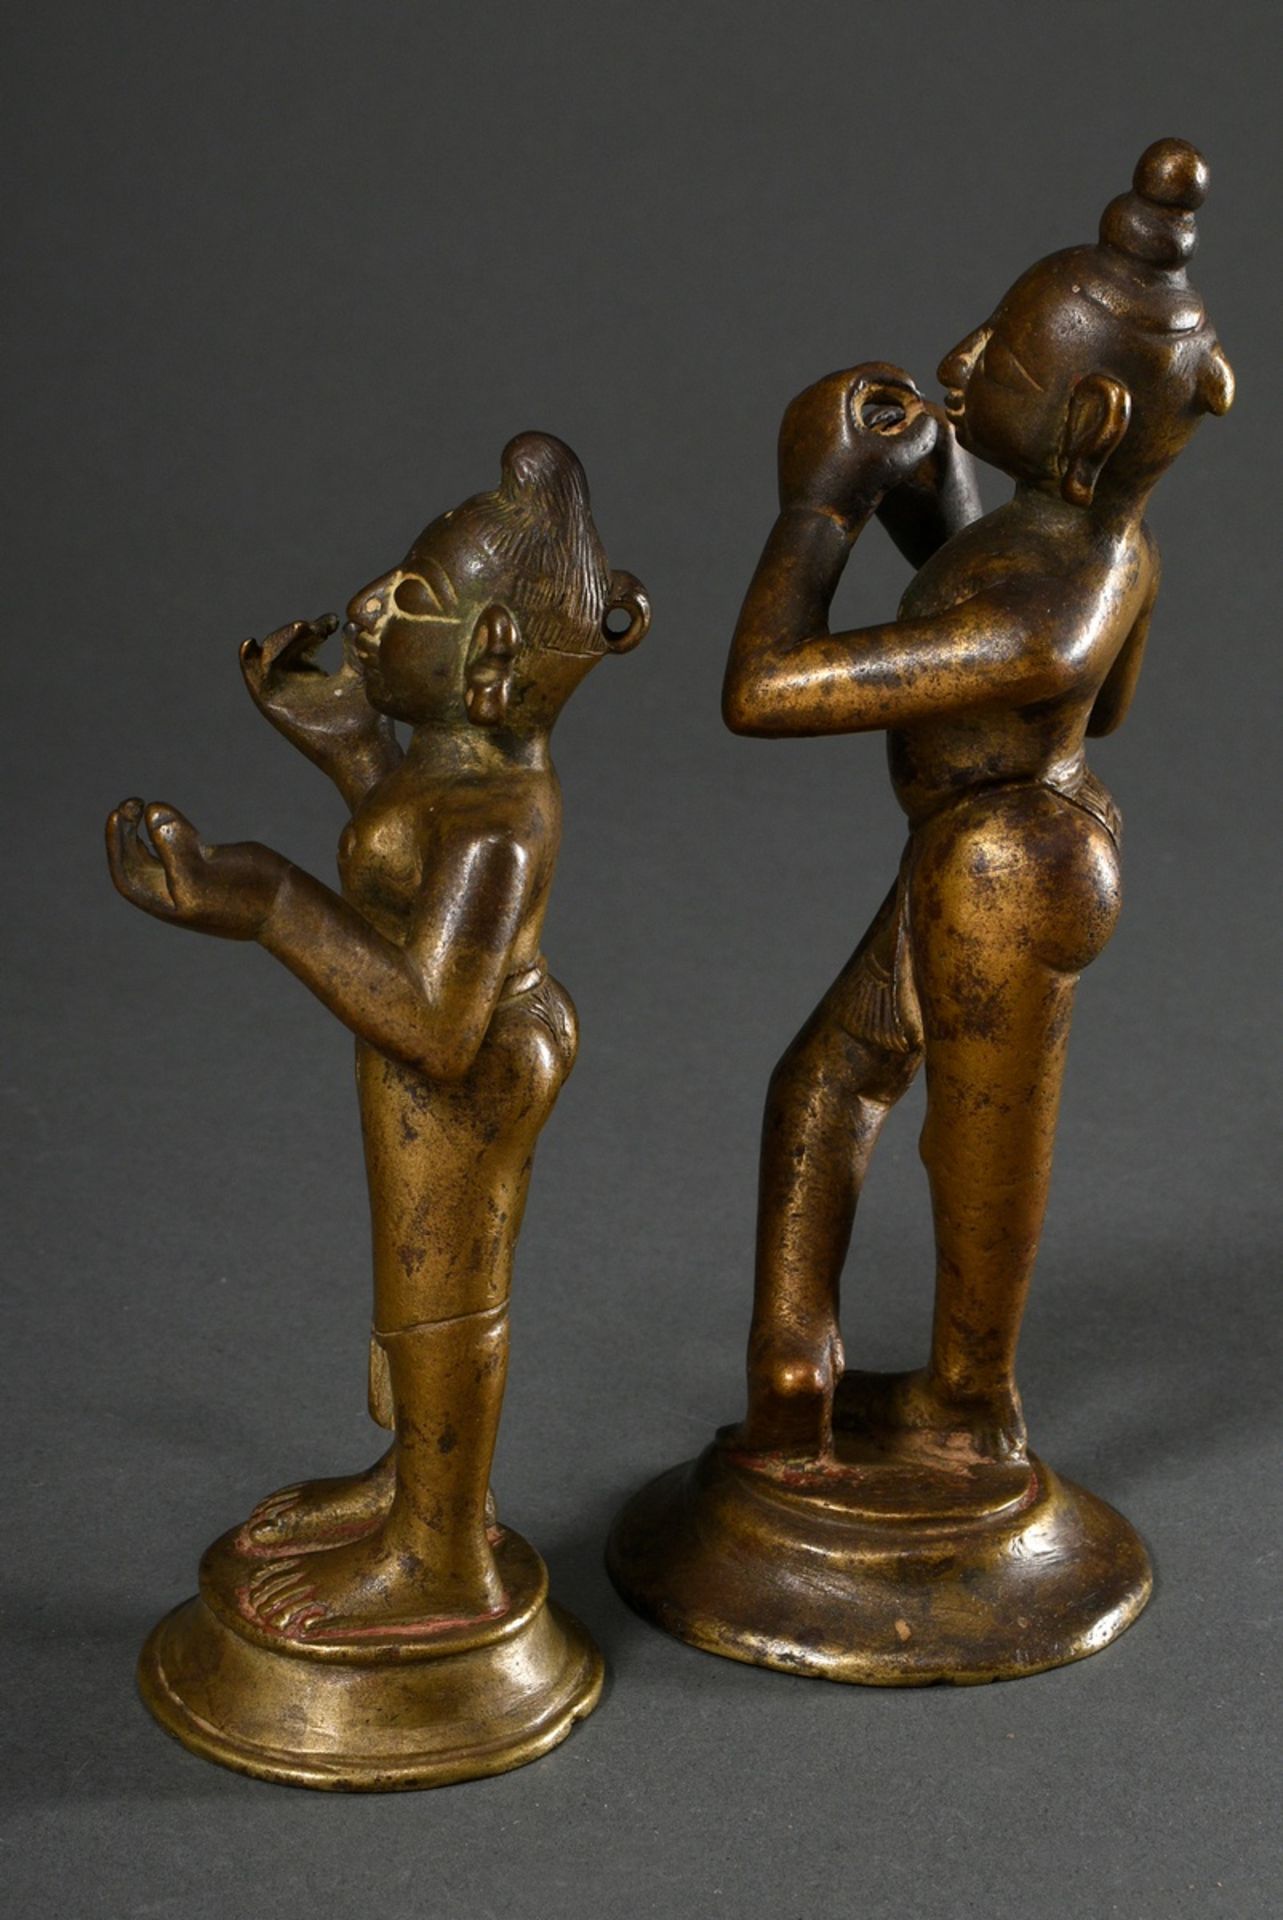 2 Fire-gilt bronze figures "Krishna Venugopola" and "Gopi Radha", India, probably 17th/18th century - Image 3 of 5